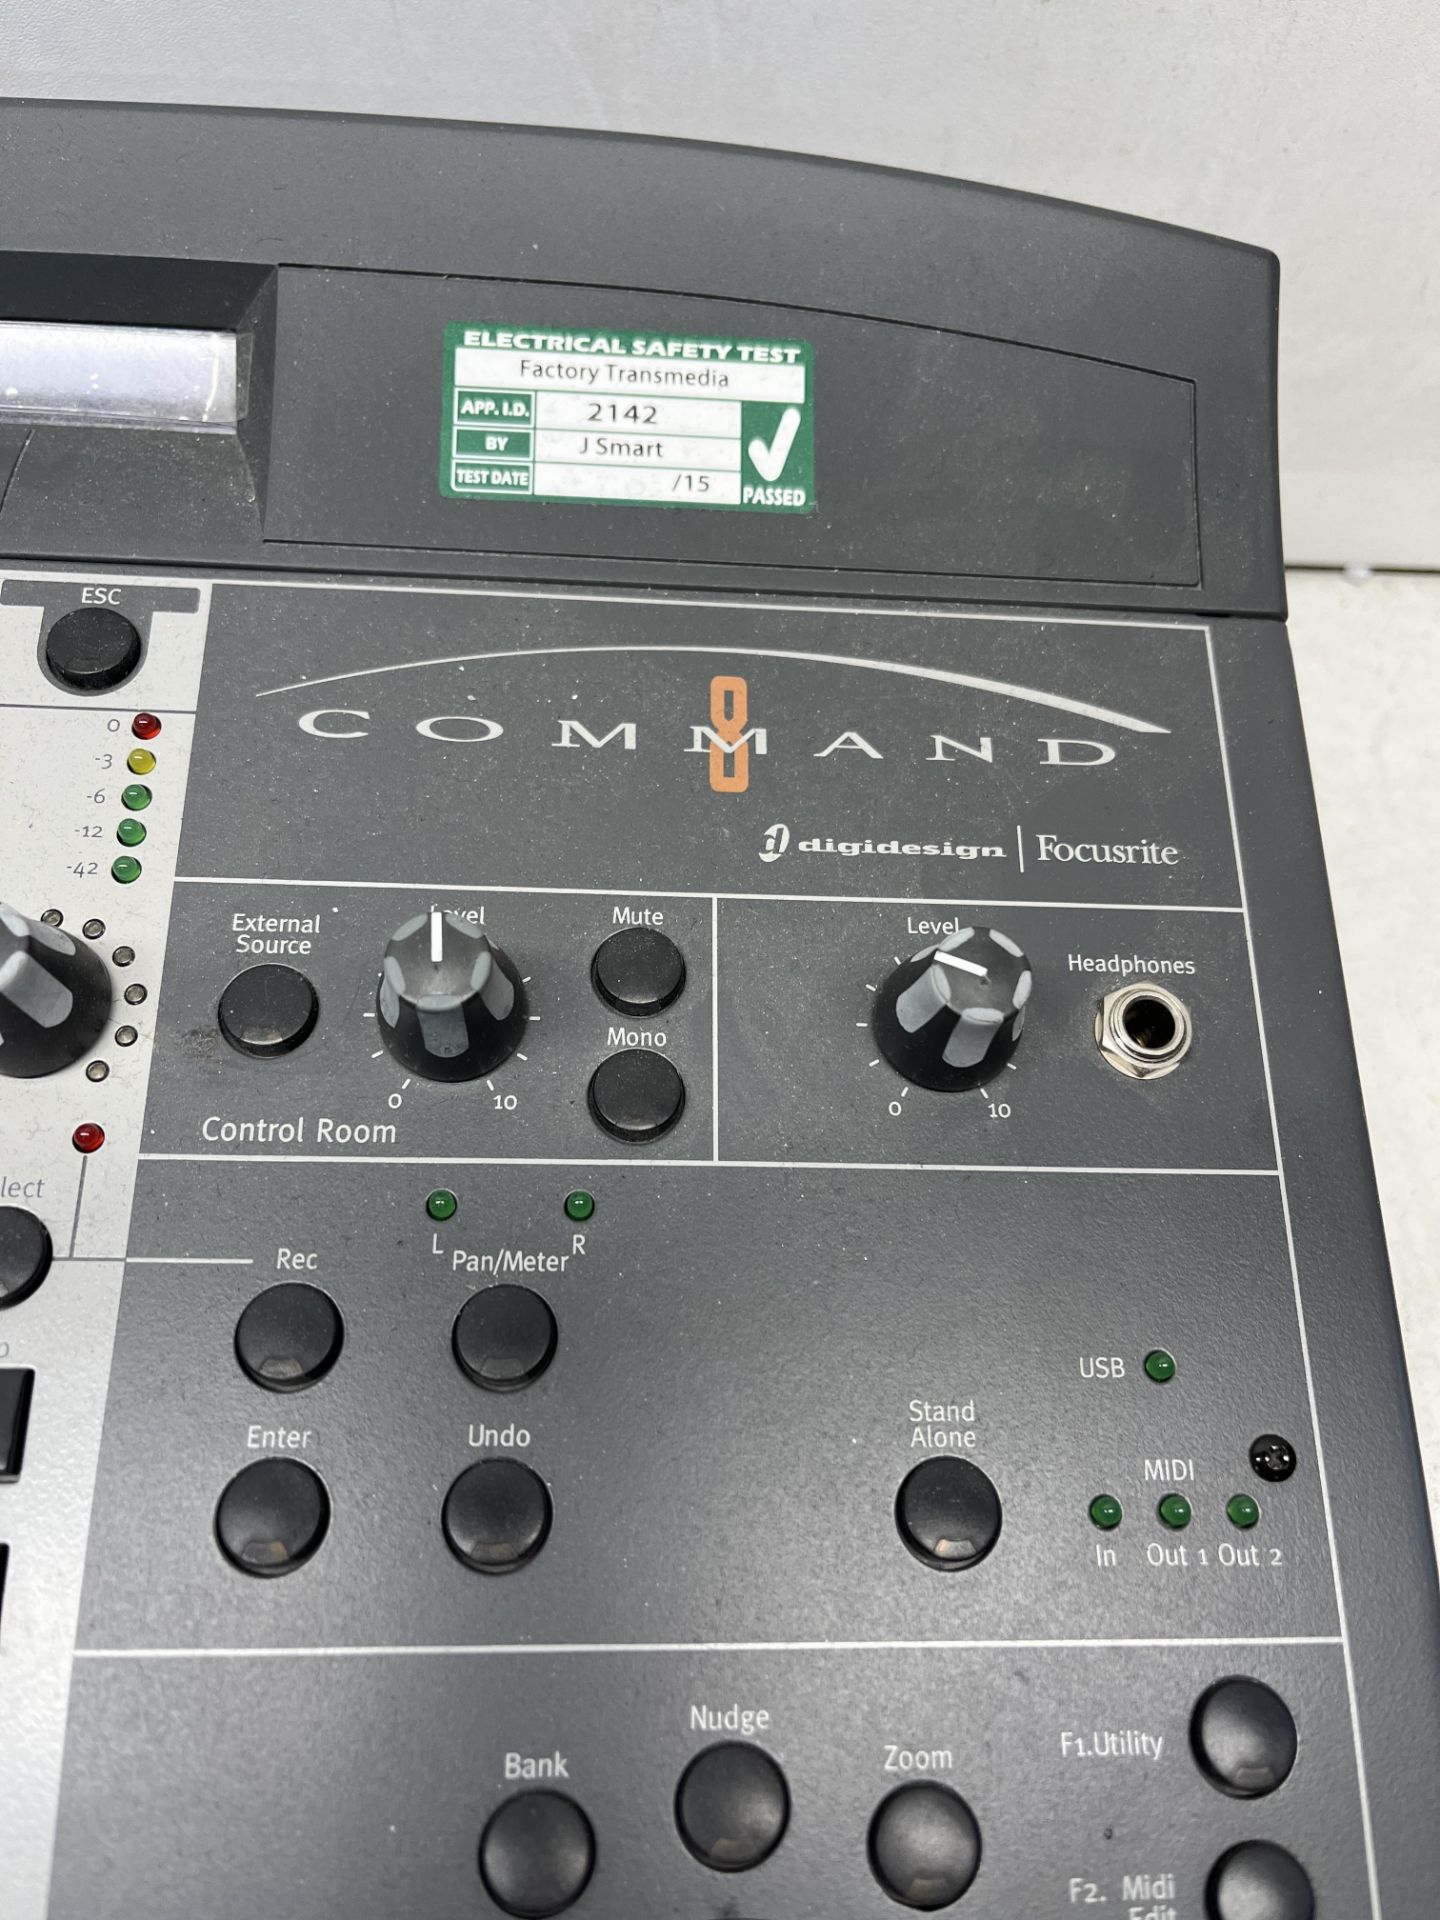 Digidesign Command 8 Analog Mixing Console Model: MC008 - Image 2 of 7